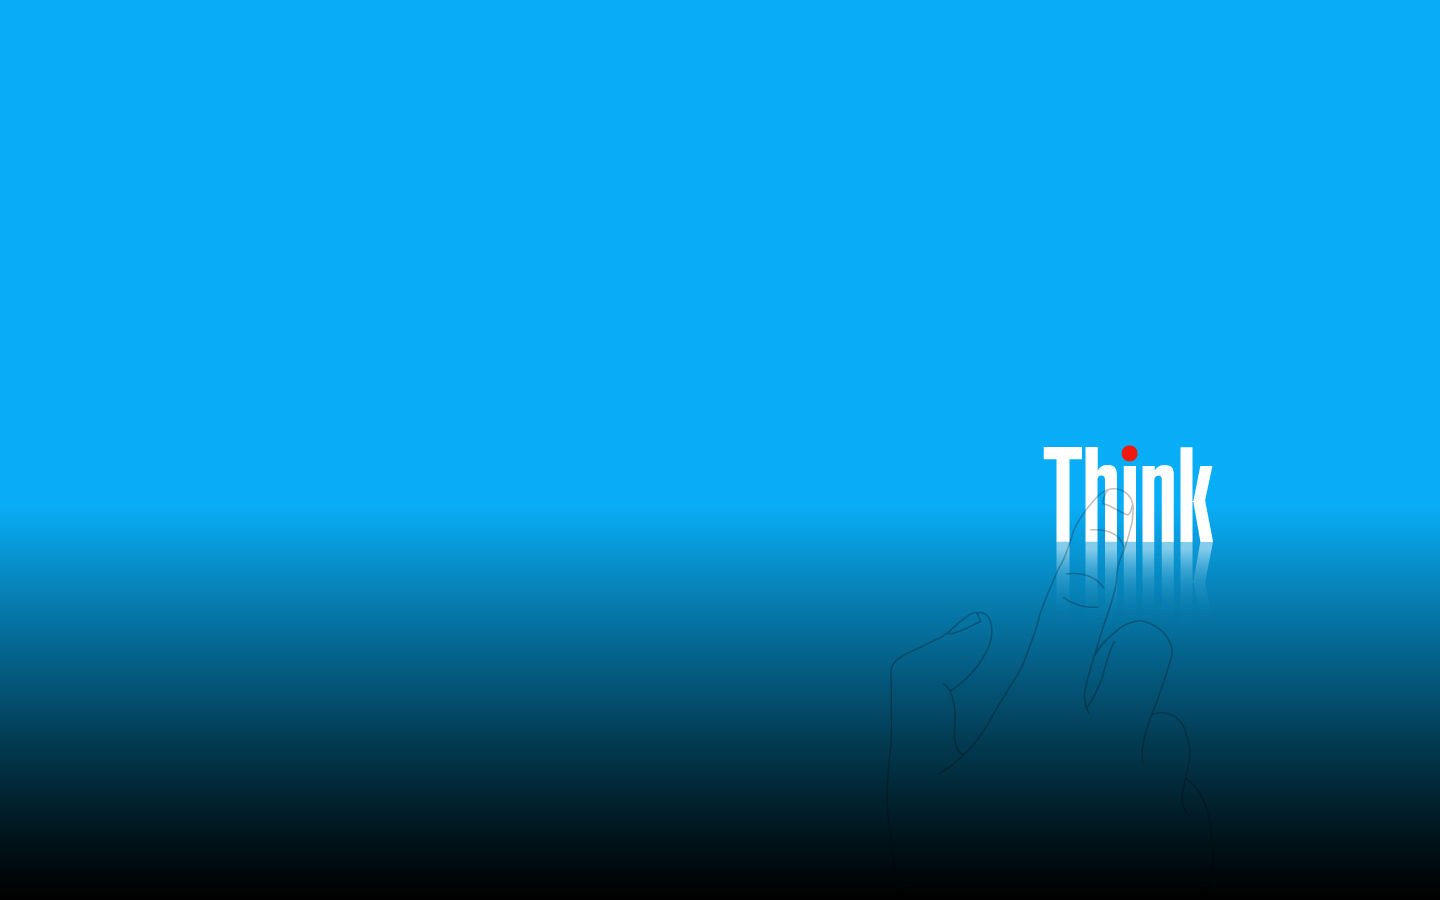 officiel 2007 15 ans du thinkpad 2011 thinkpad edge e520